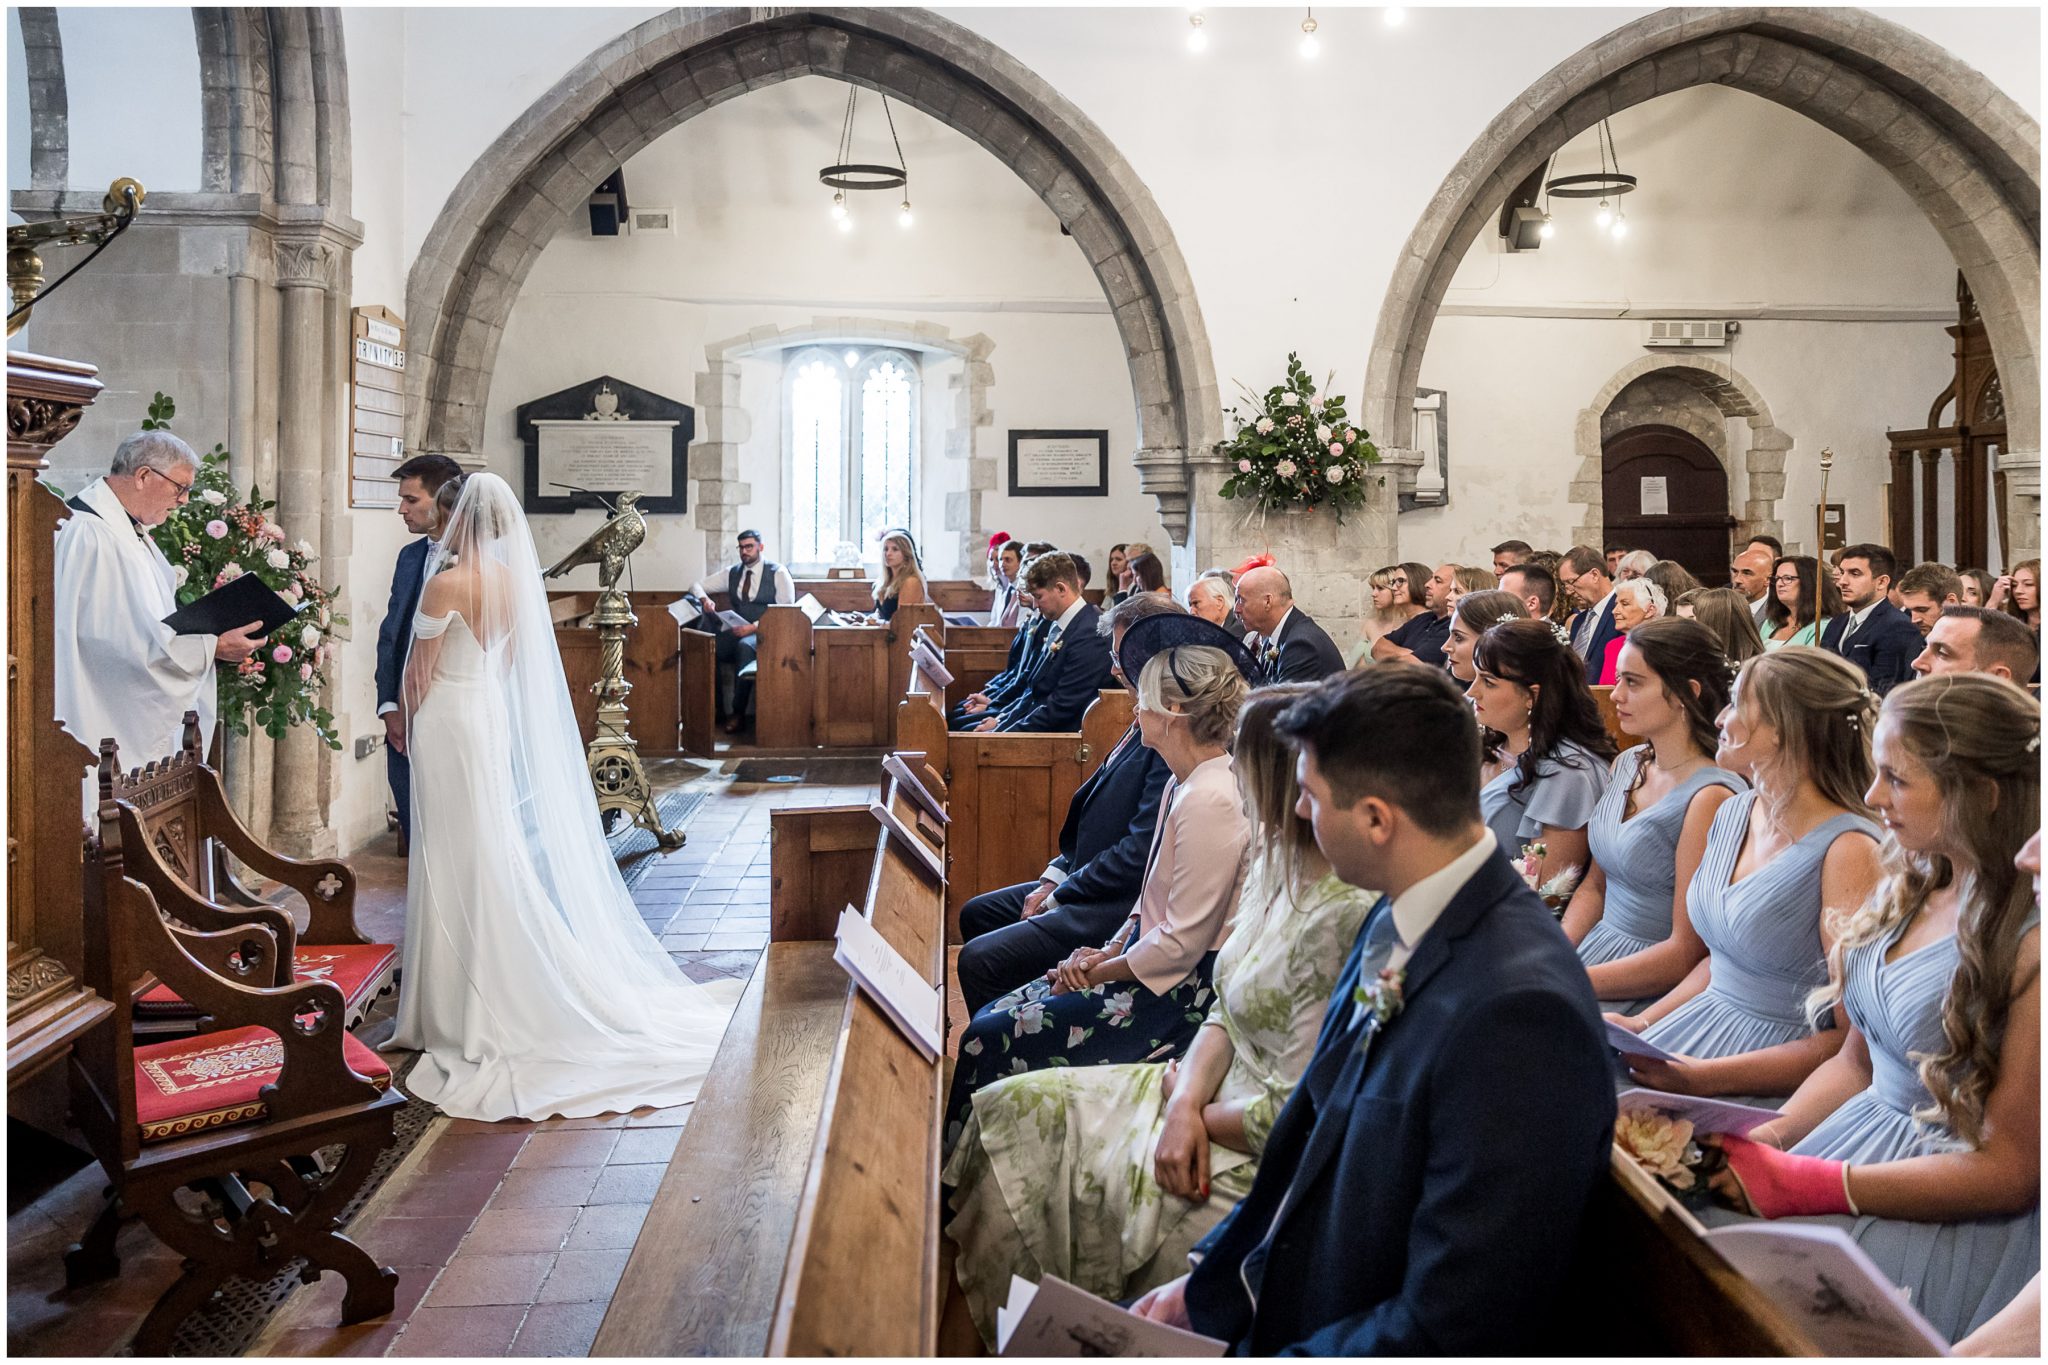 Wedding ceremony in Droxford church in Hampshire